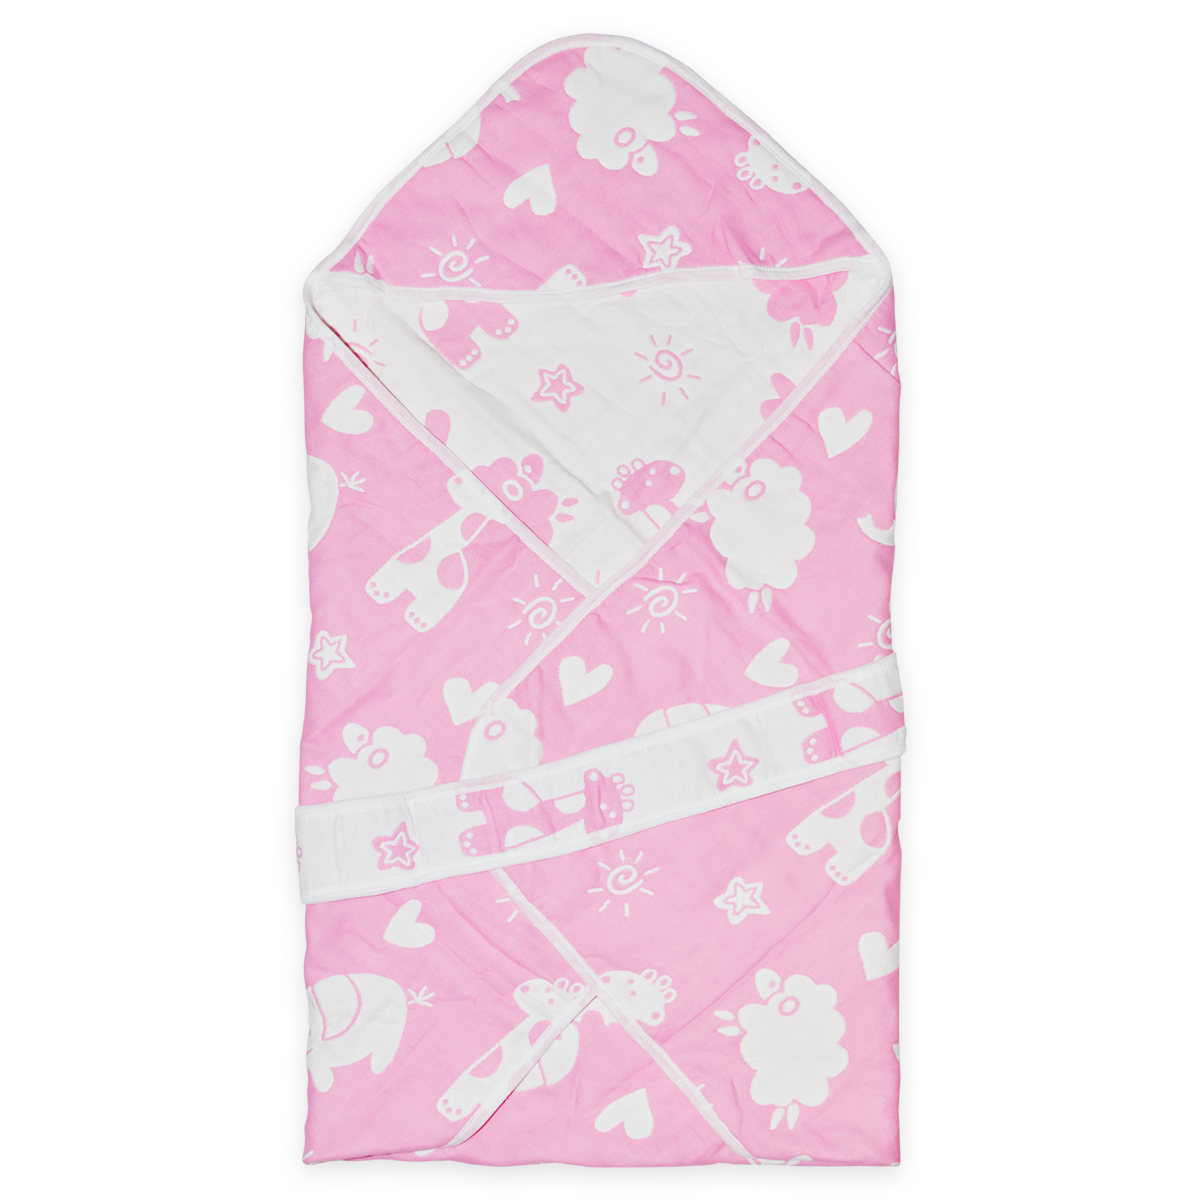 Одеяло-конверт Baby Fox Животные, весеннее, розовое, 90х90 см